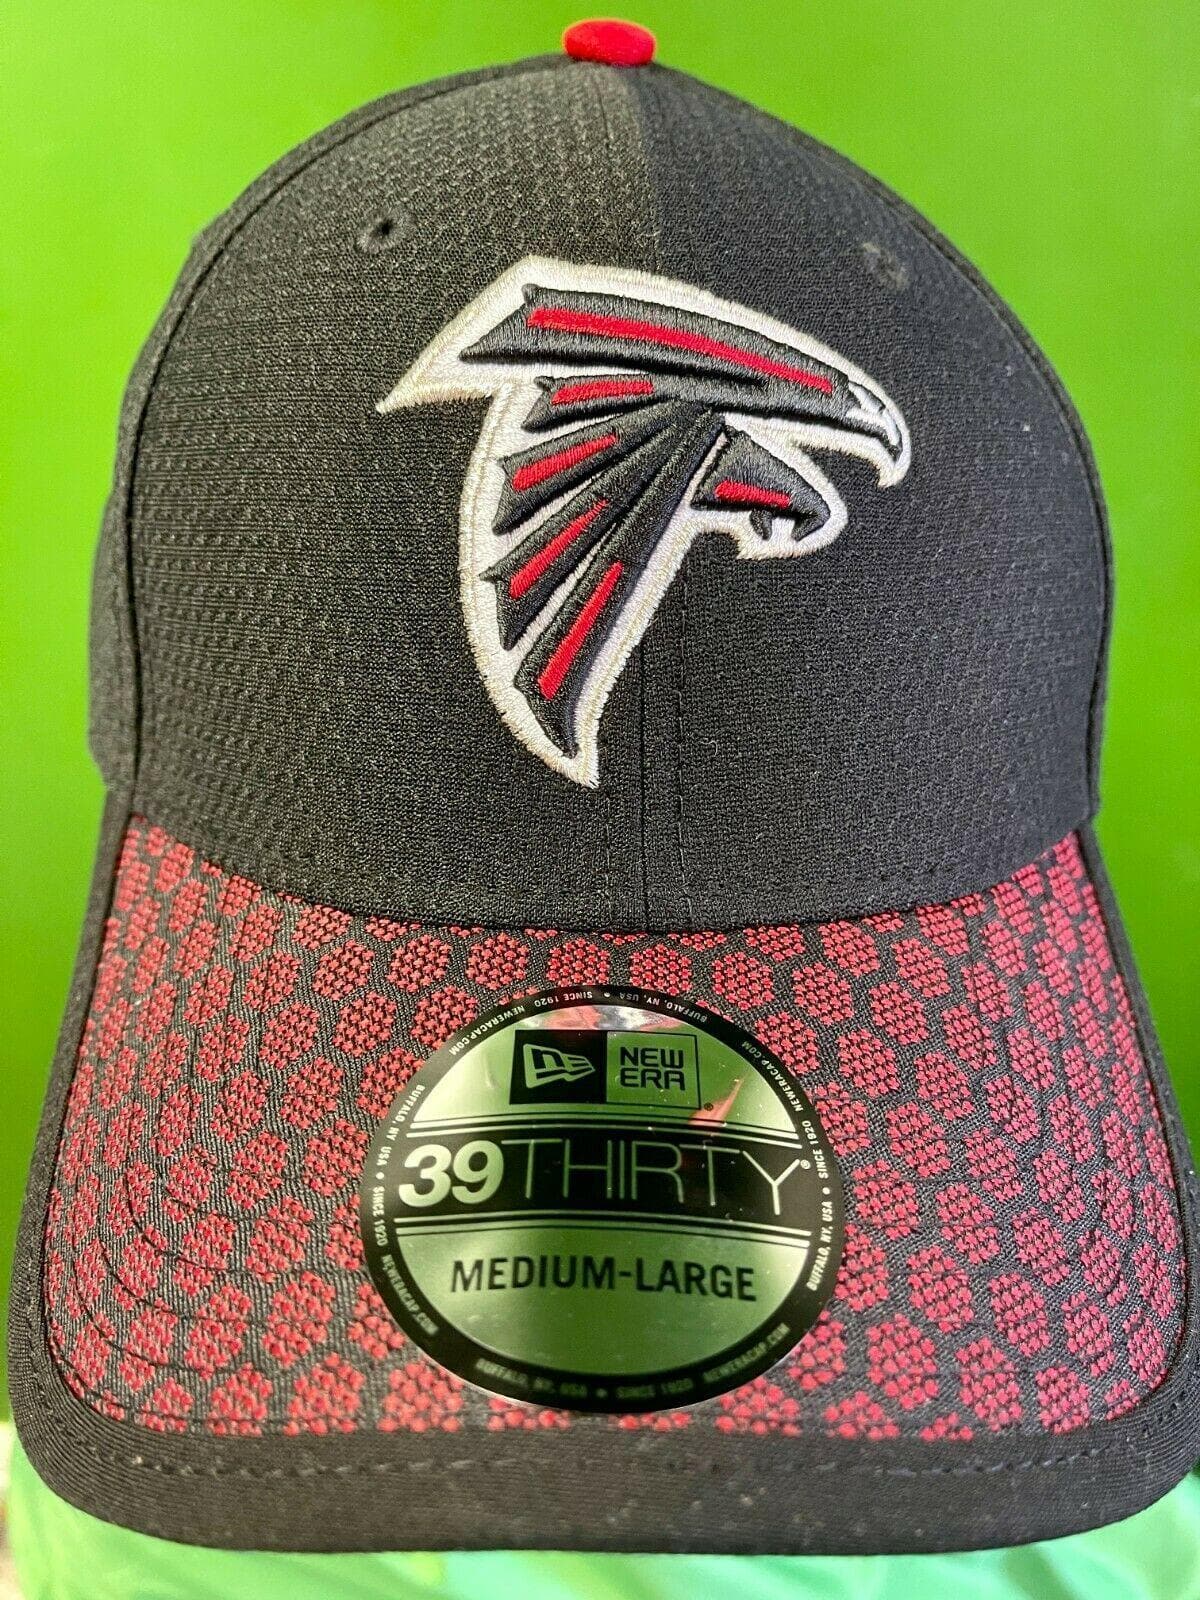 NFL Atlanta Falcons New Era 39THIRTY On Field Cap Hat M-L NWT